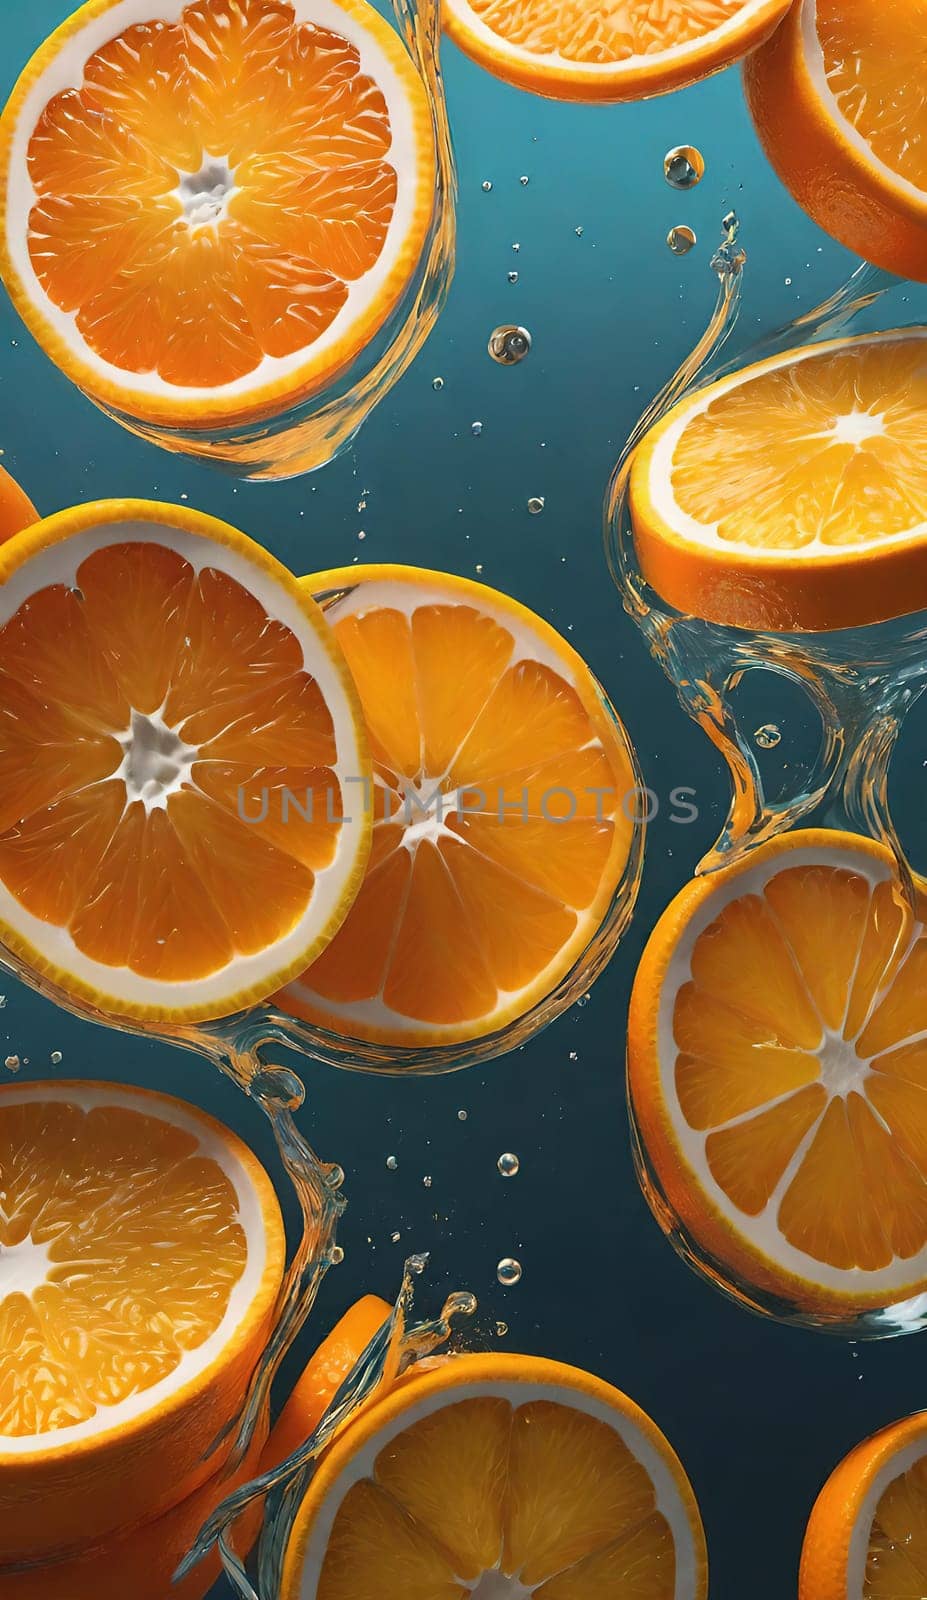 Fresh orange falling into water with splash on background, by yilmazsavaskandag